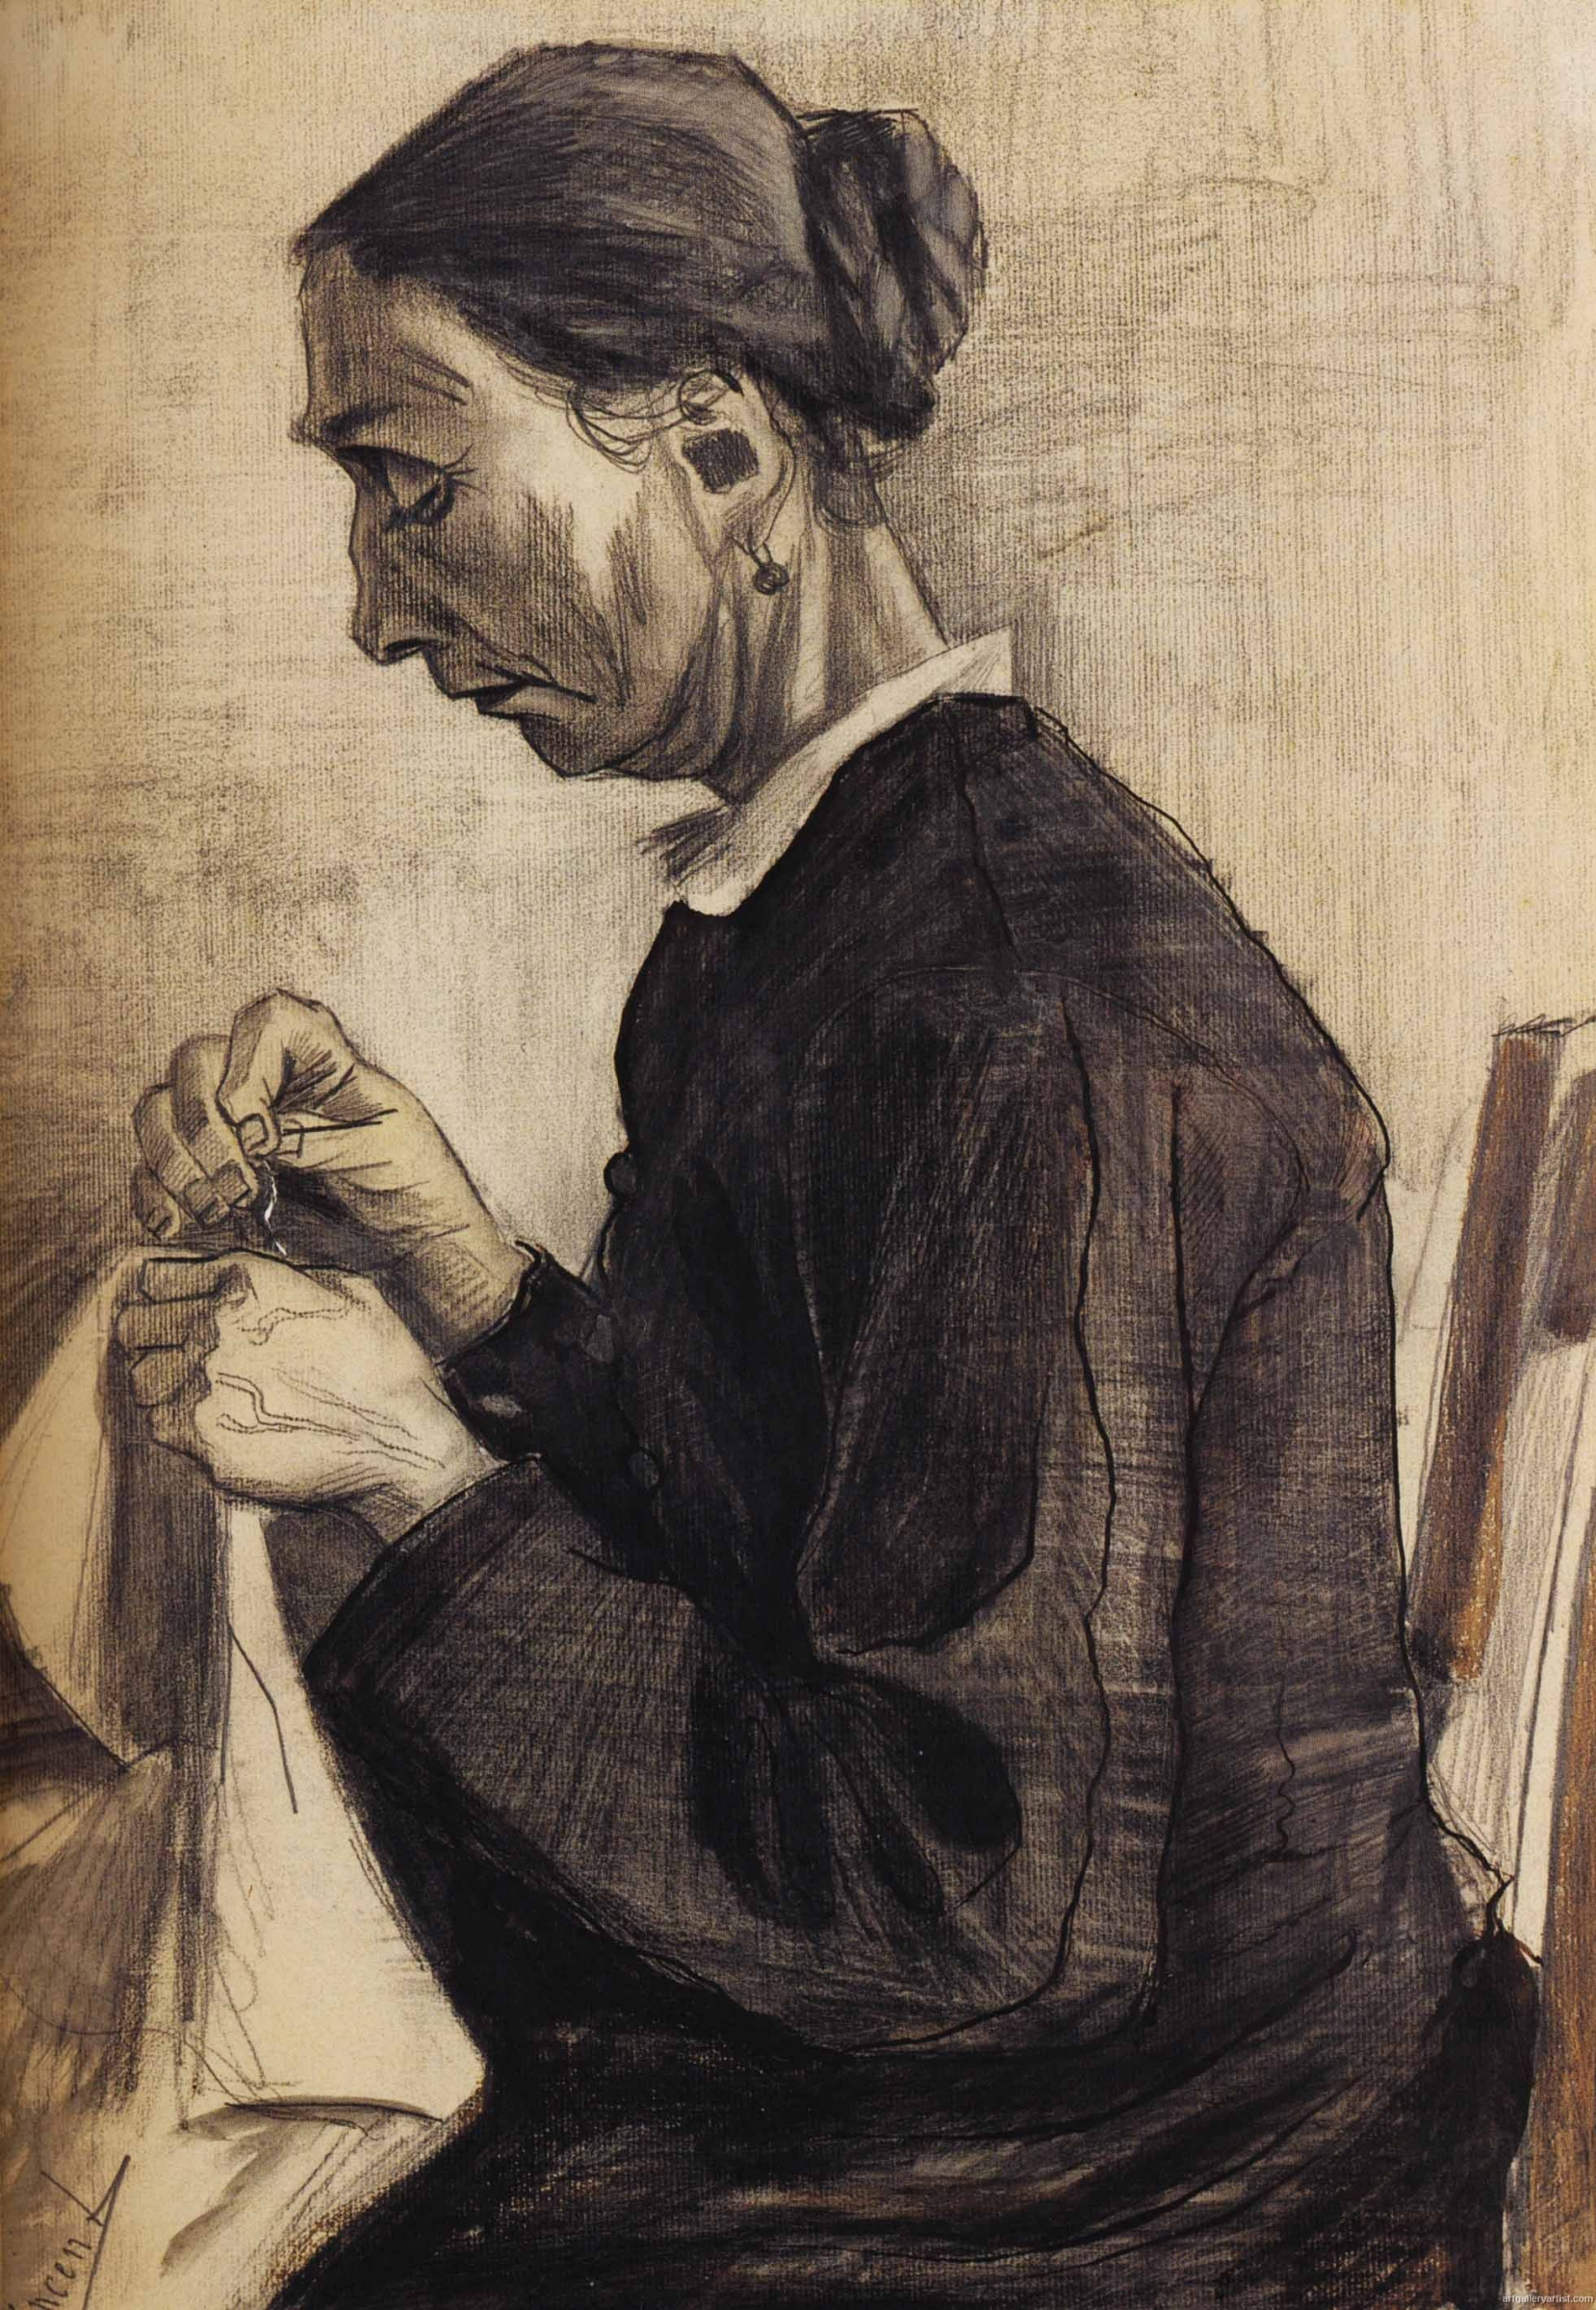 Buy digital version: Shin sewing by Vincent van Gogh